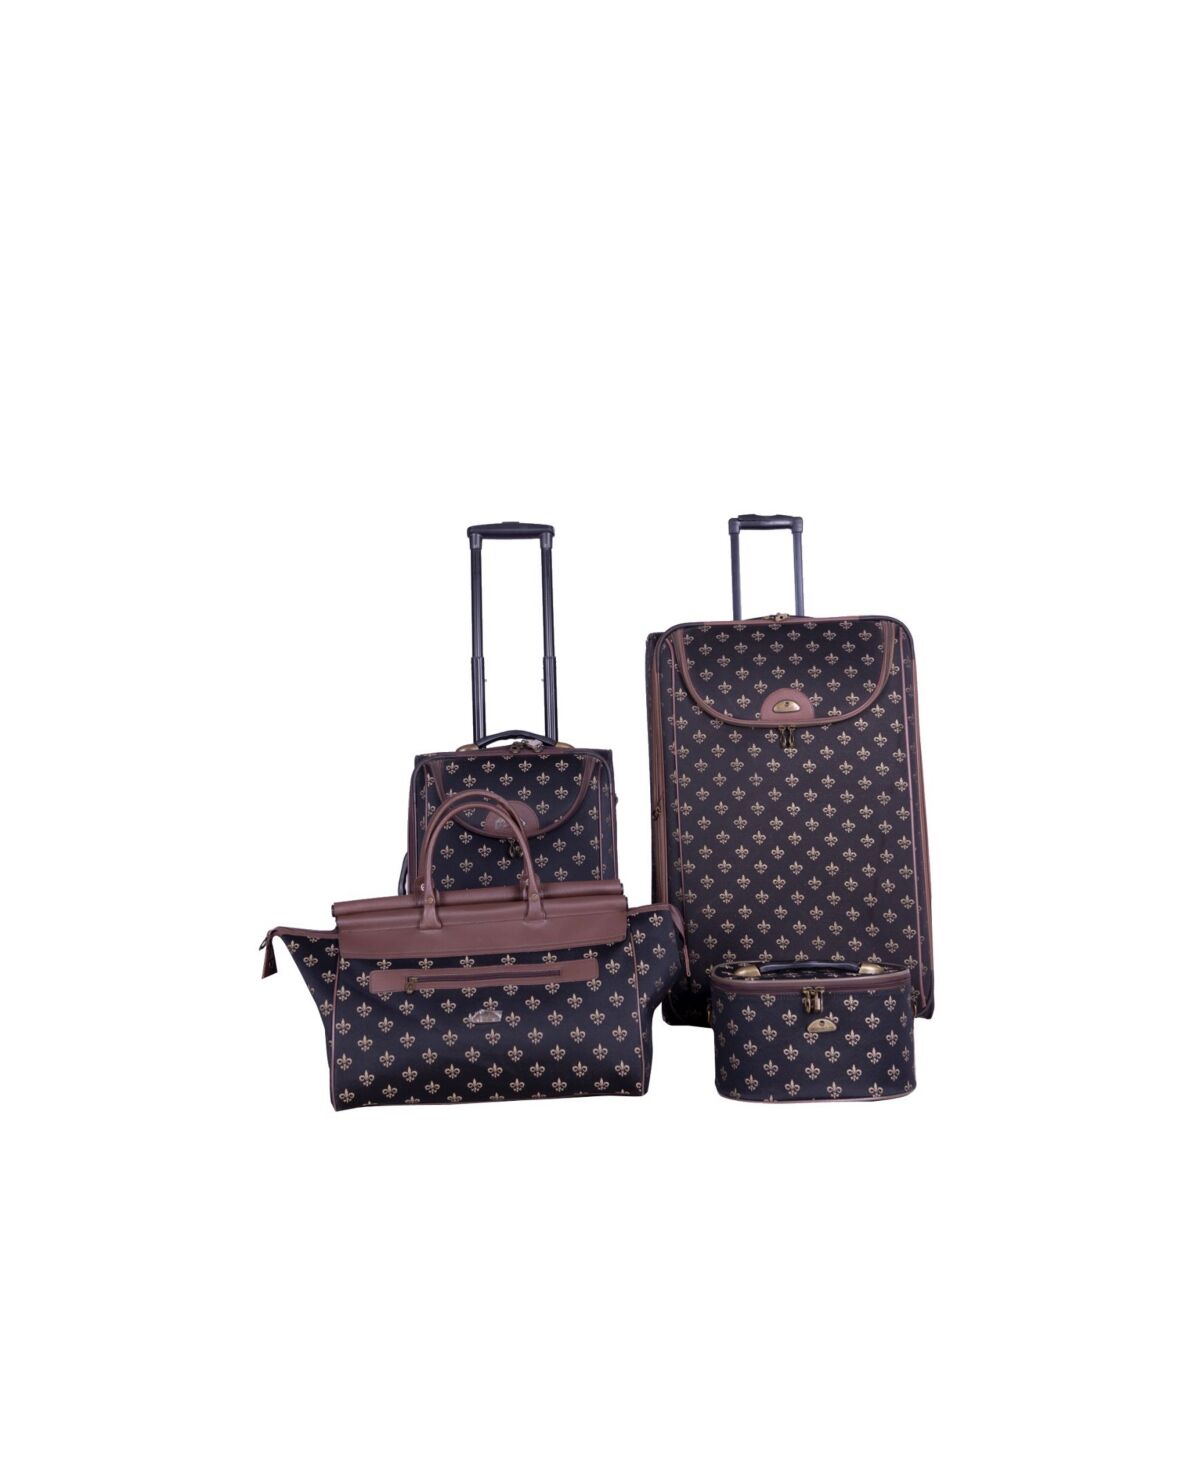 American Flyer Fleur De Lis 4 Piece Luggage Set - Black